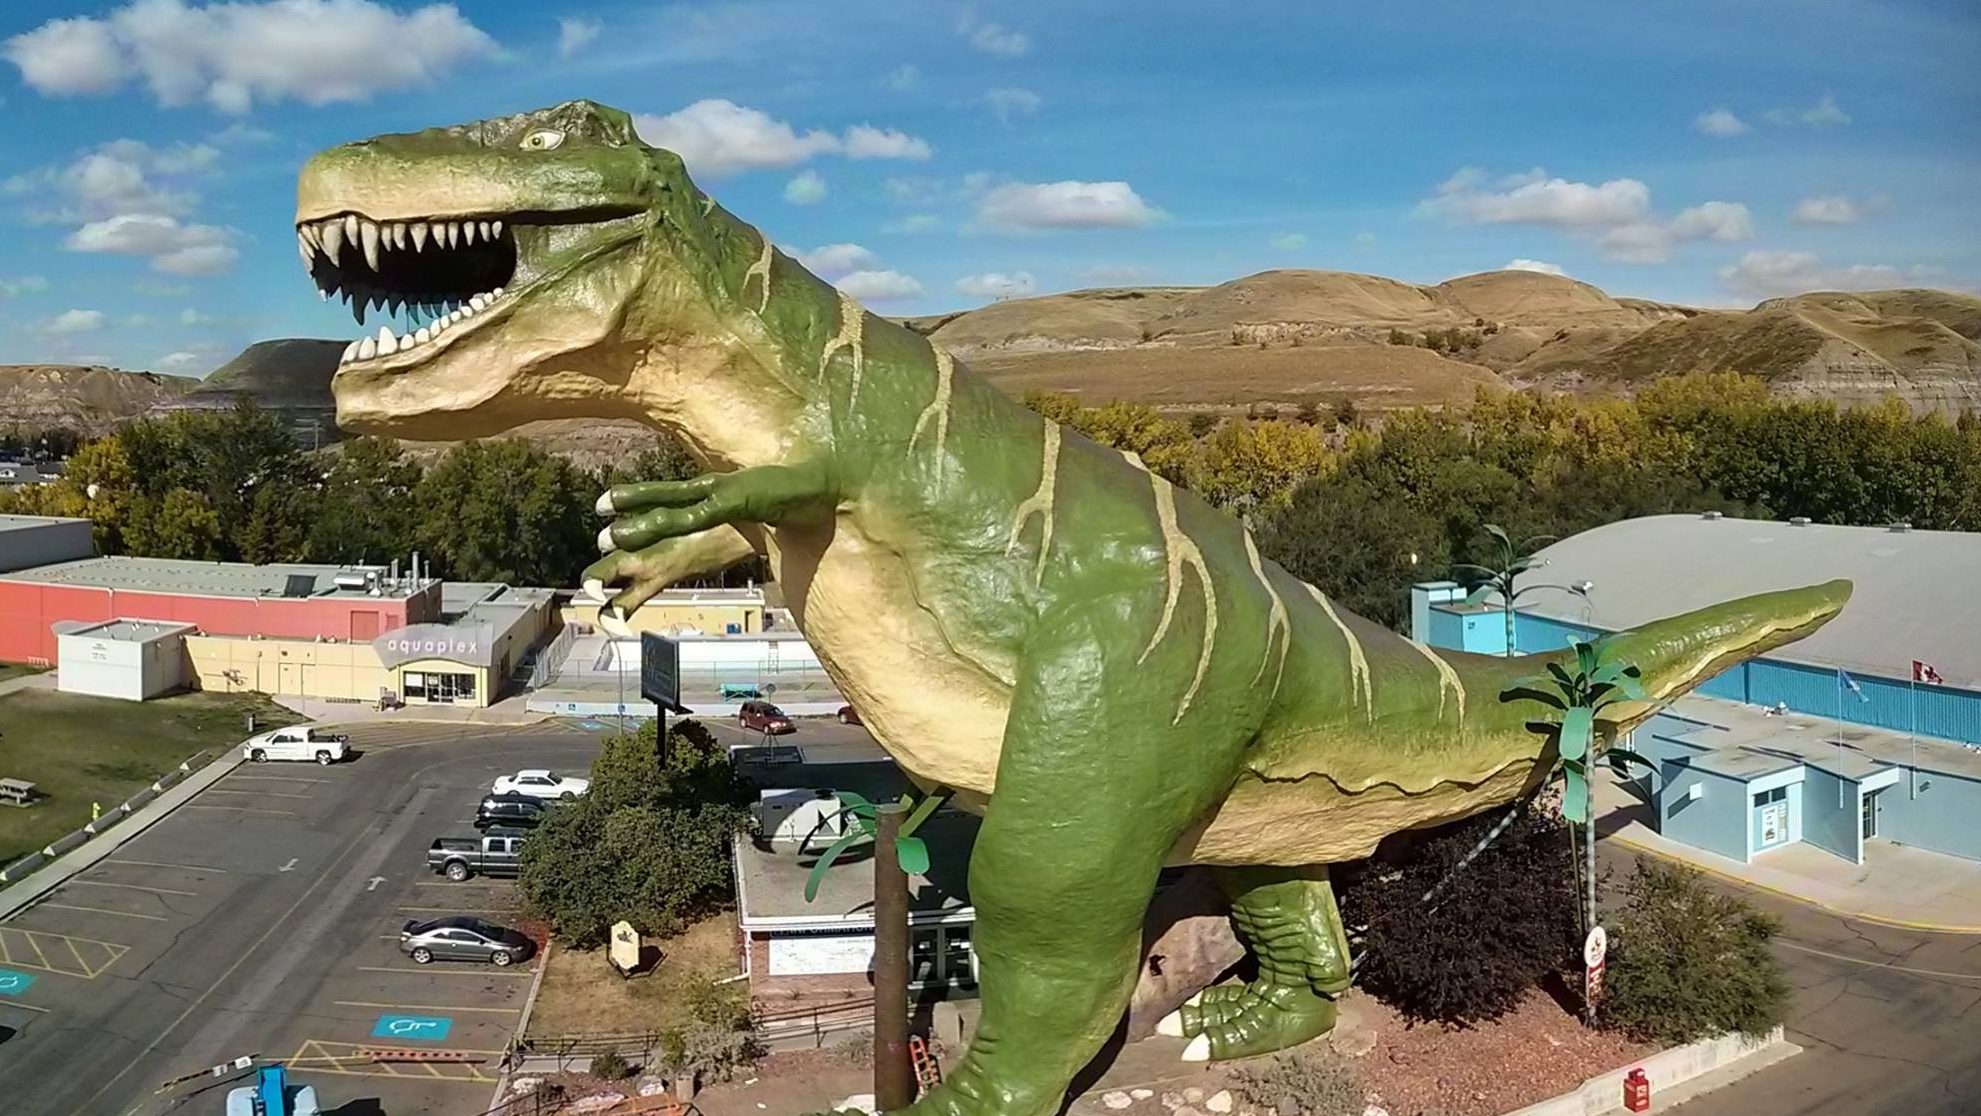 world-s-largest-dinosaur-getting-a-makeover-citynews-edmonton